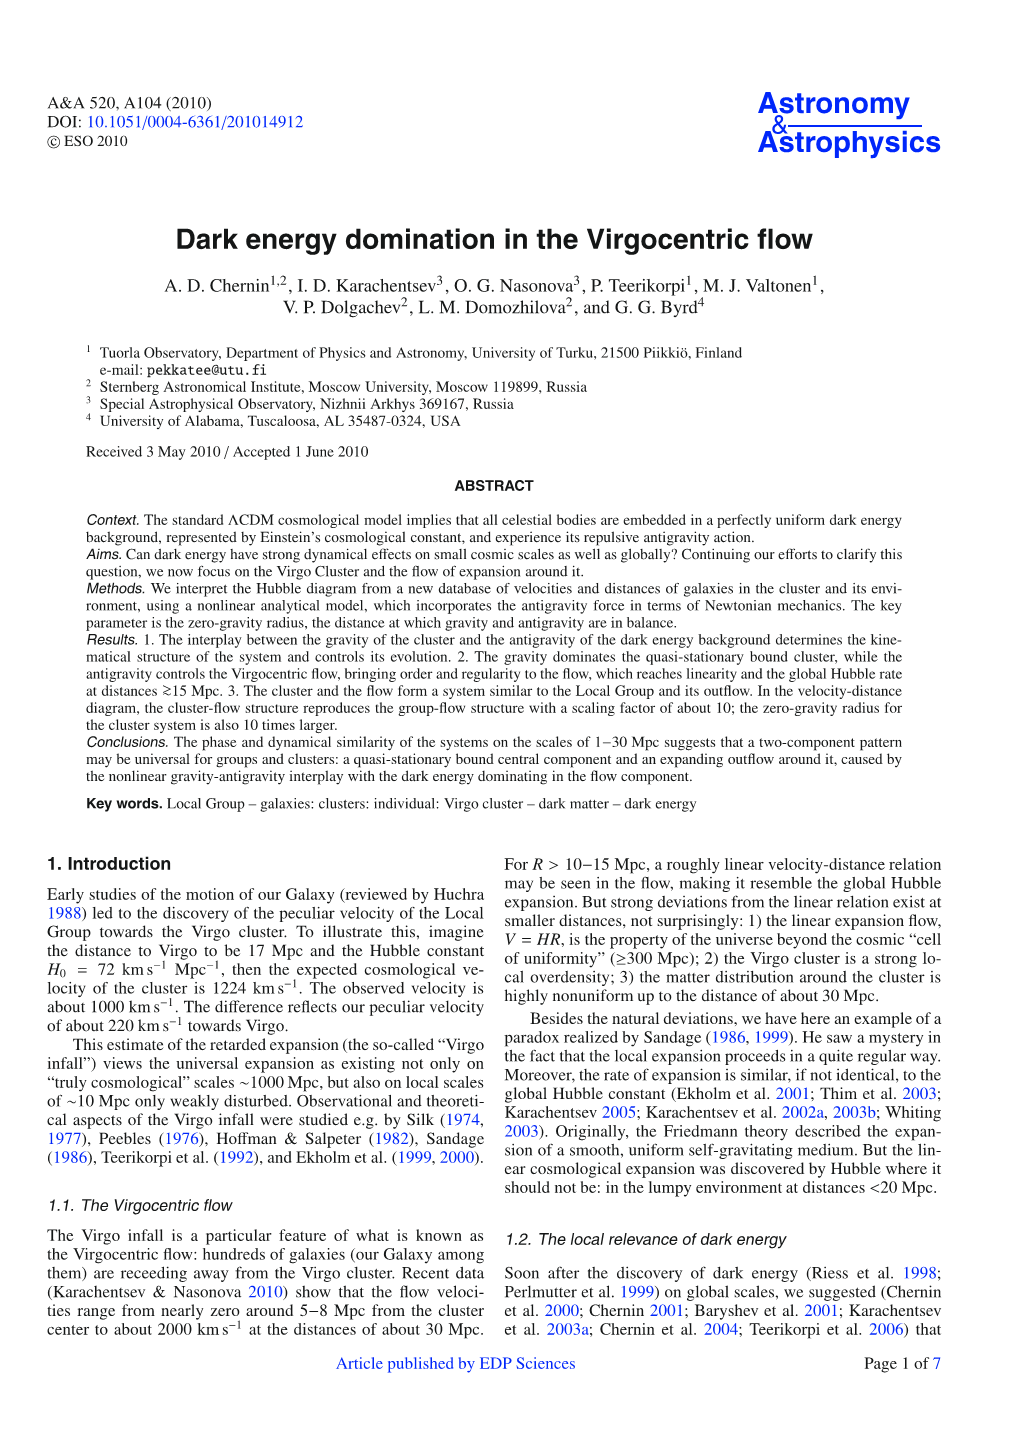 Dark Energy Domination in the Virgocentric Flow